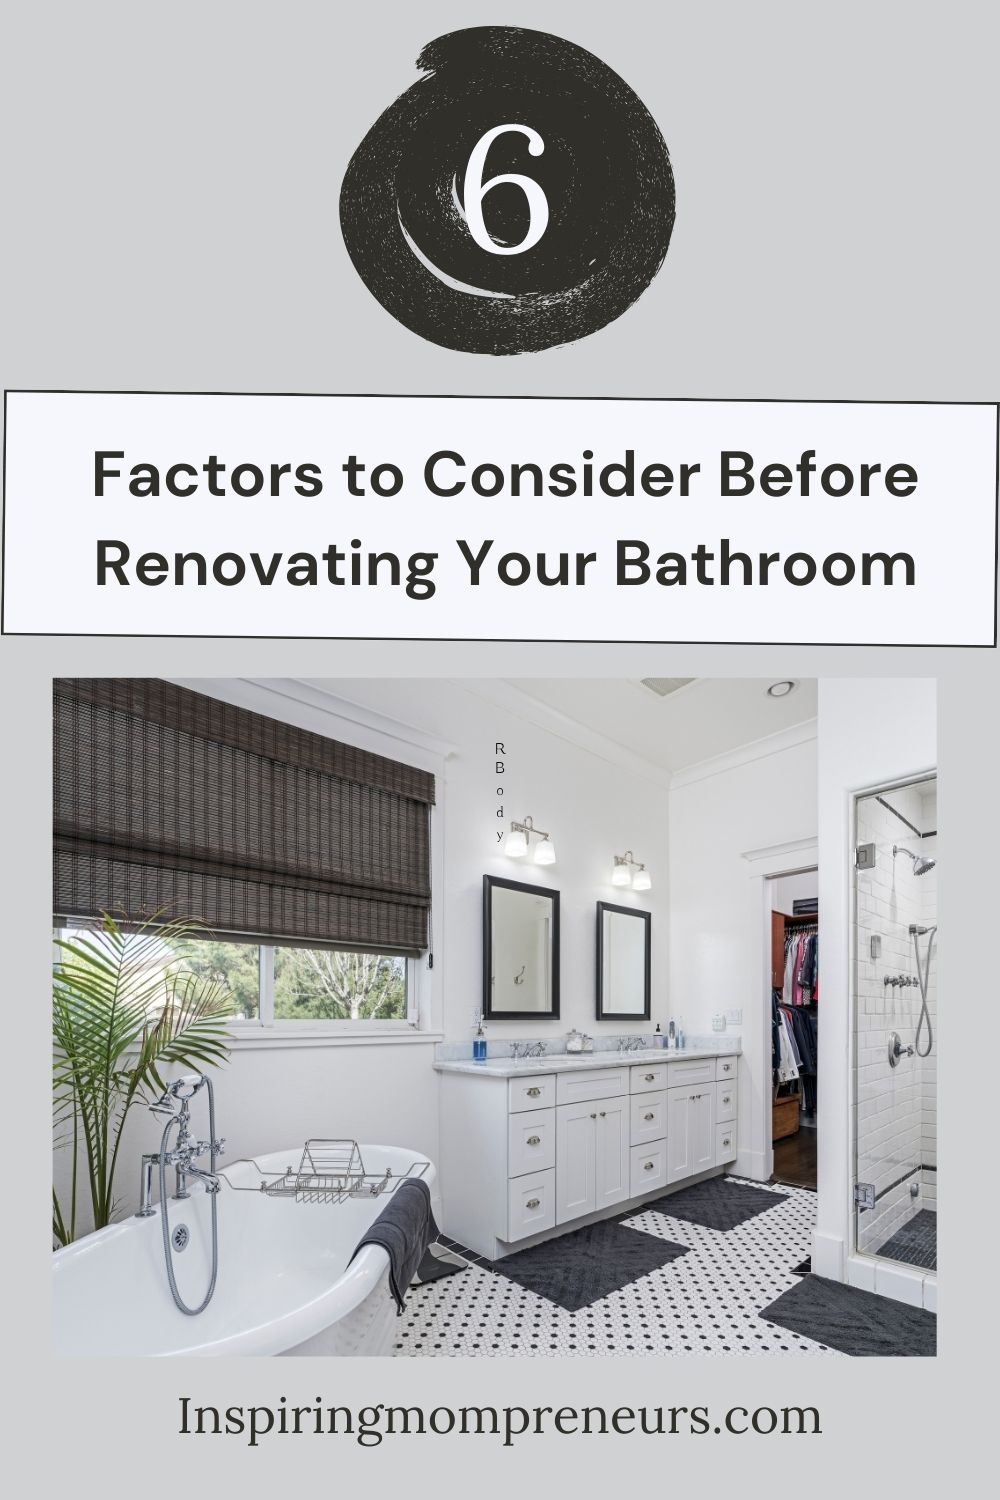 renovating your bathroom